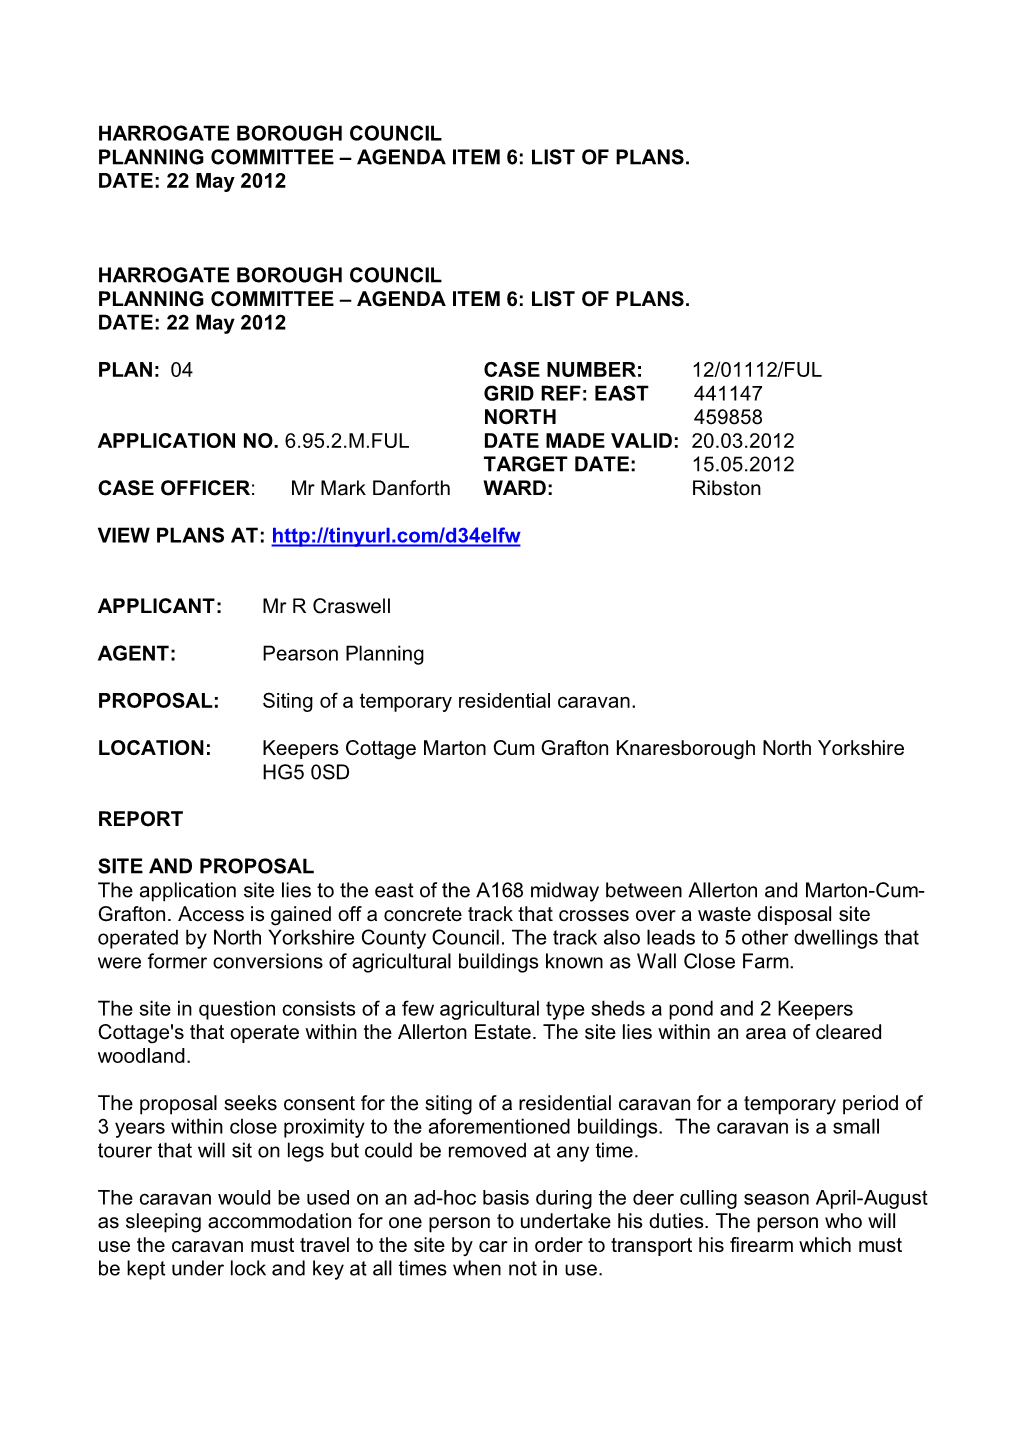 Harrogate Borough Council Planning Committee – Agenda Item 6: List of Plans